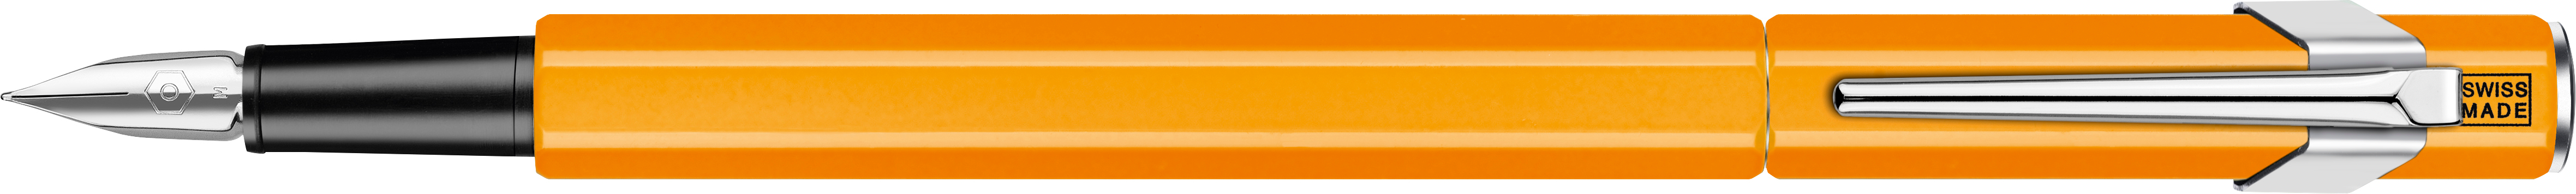 CARAN D'ACHE Stylo plume 849 M 840.030 orange fluo, verni